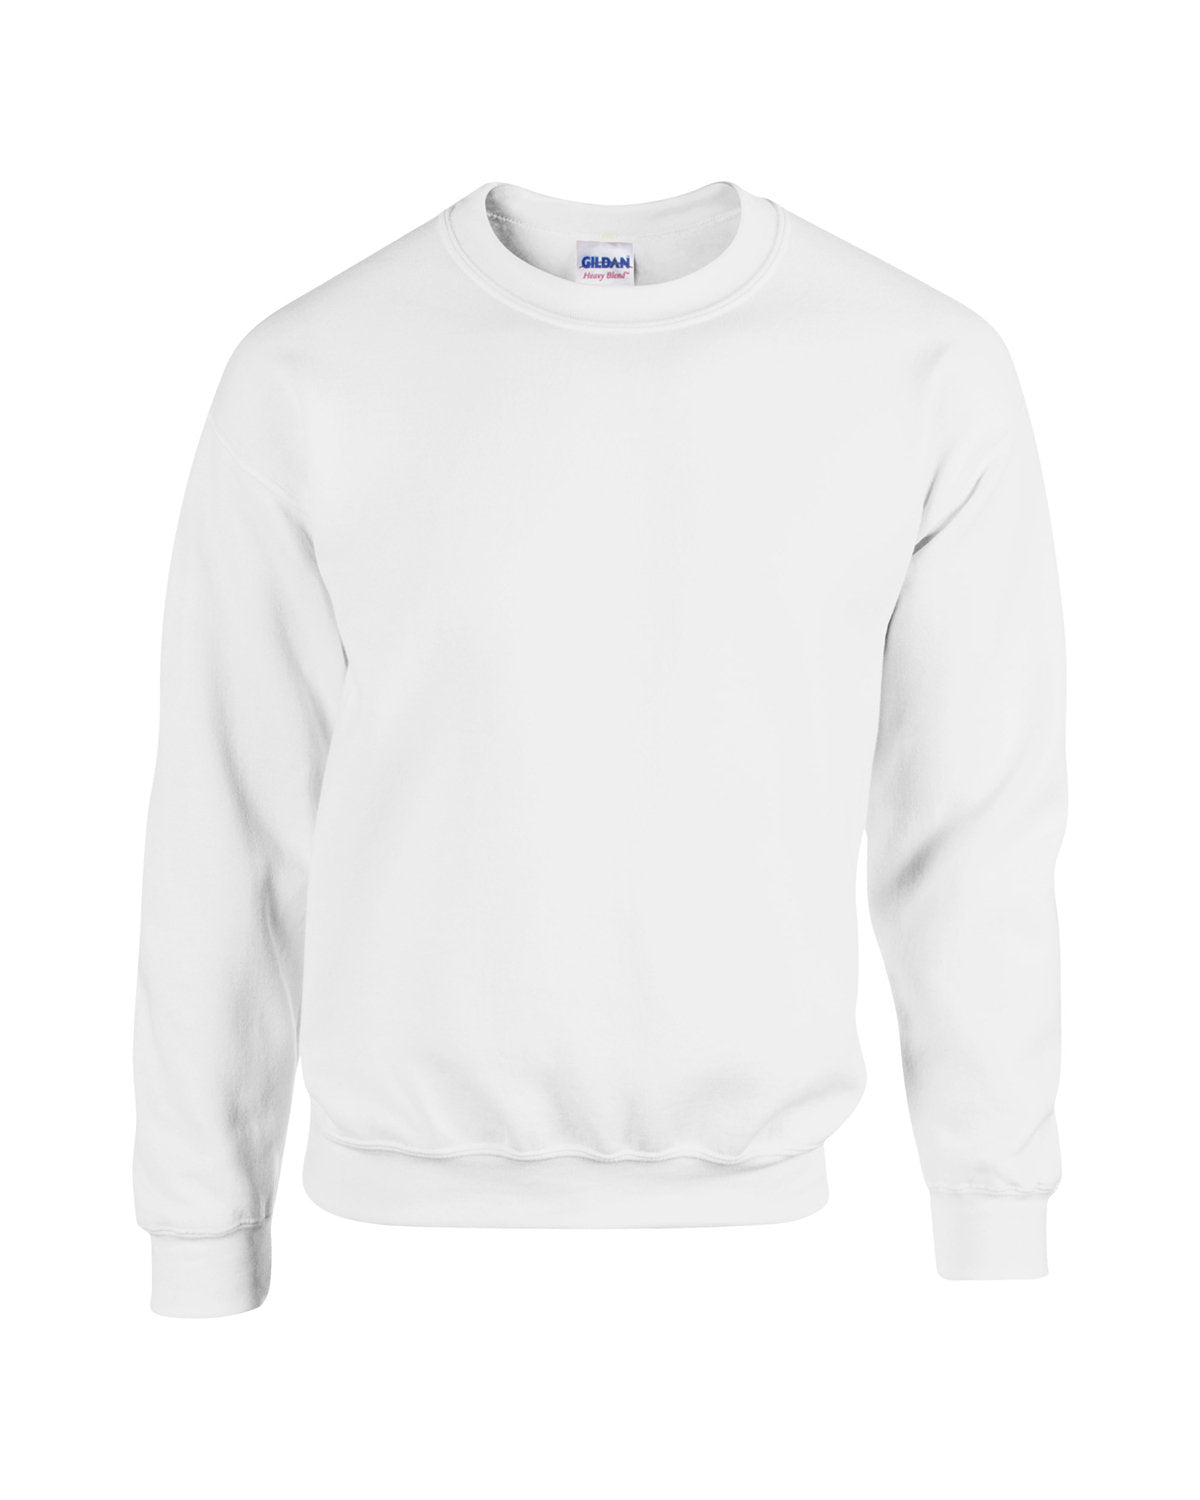 Randland Souvenir Series Crewneck Sweatshirt